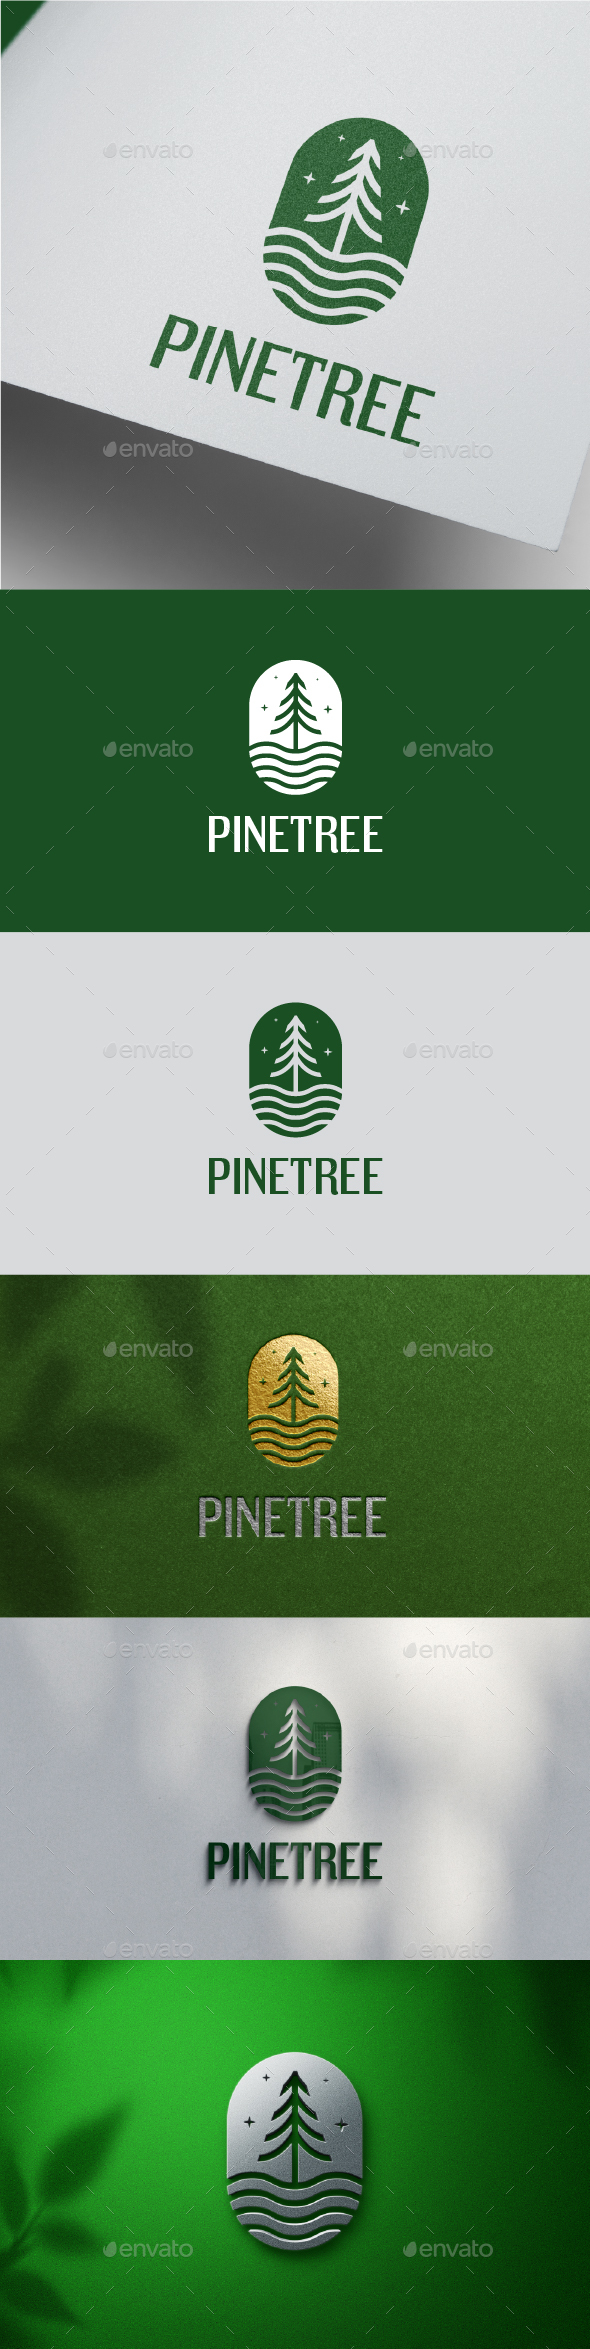 Pine tree logo